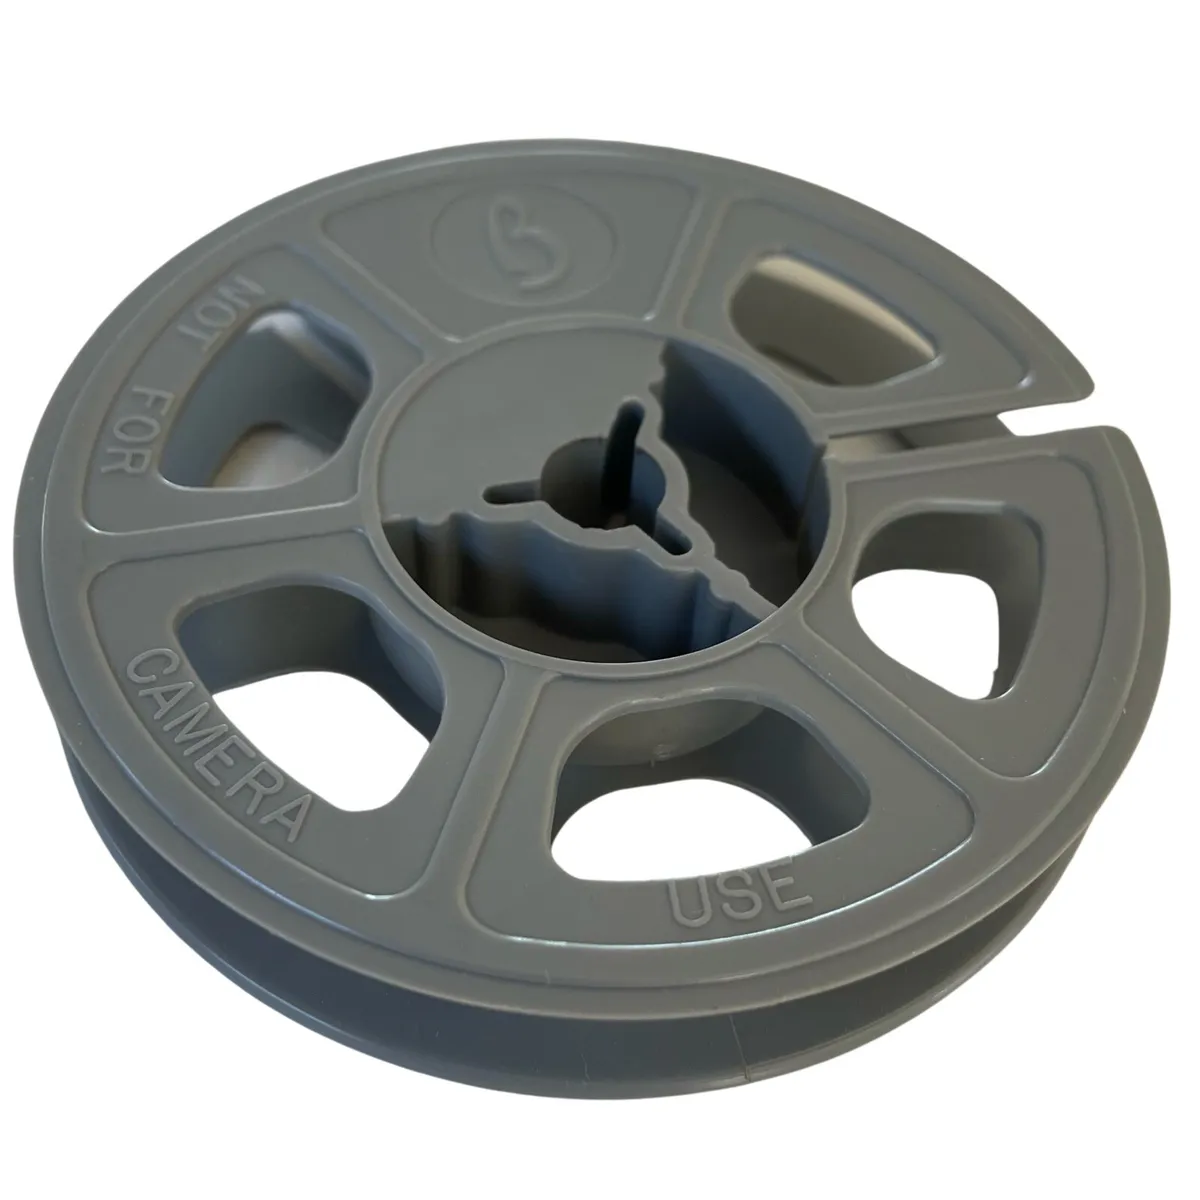 X4 EMPTY 8mm 3 diameter Grey Film Reels with letter B LOGO - Unique  Branding